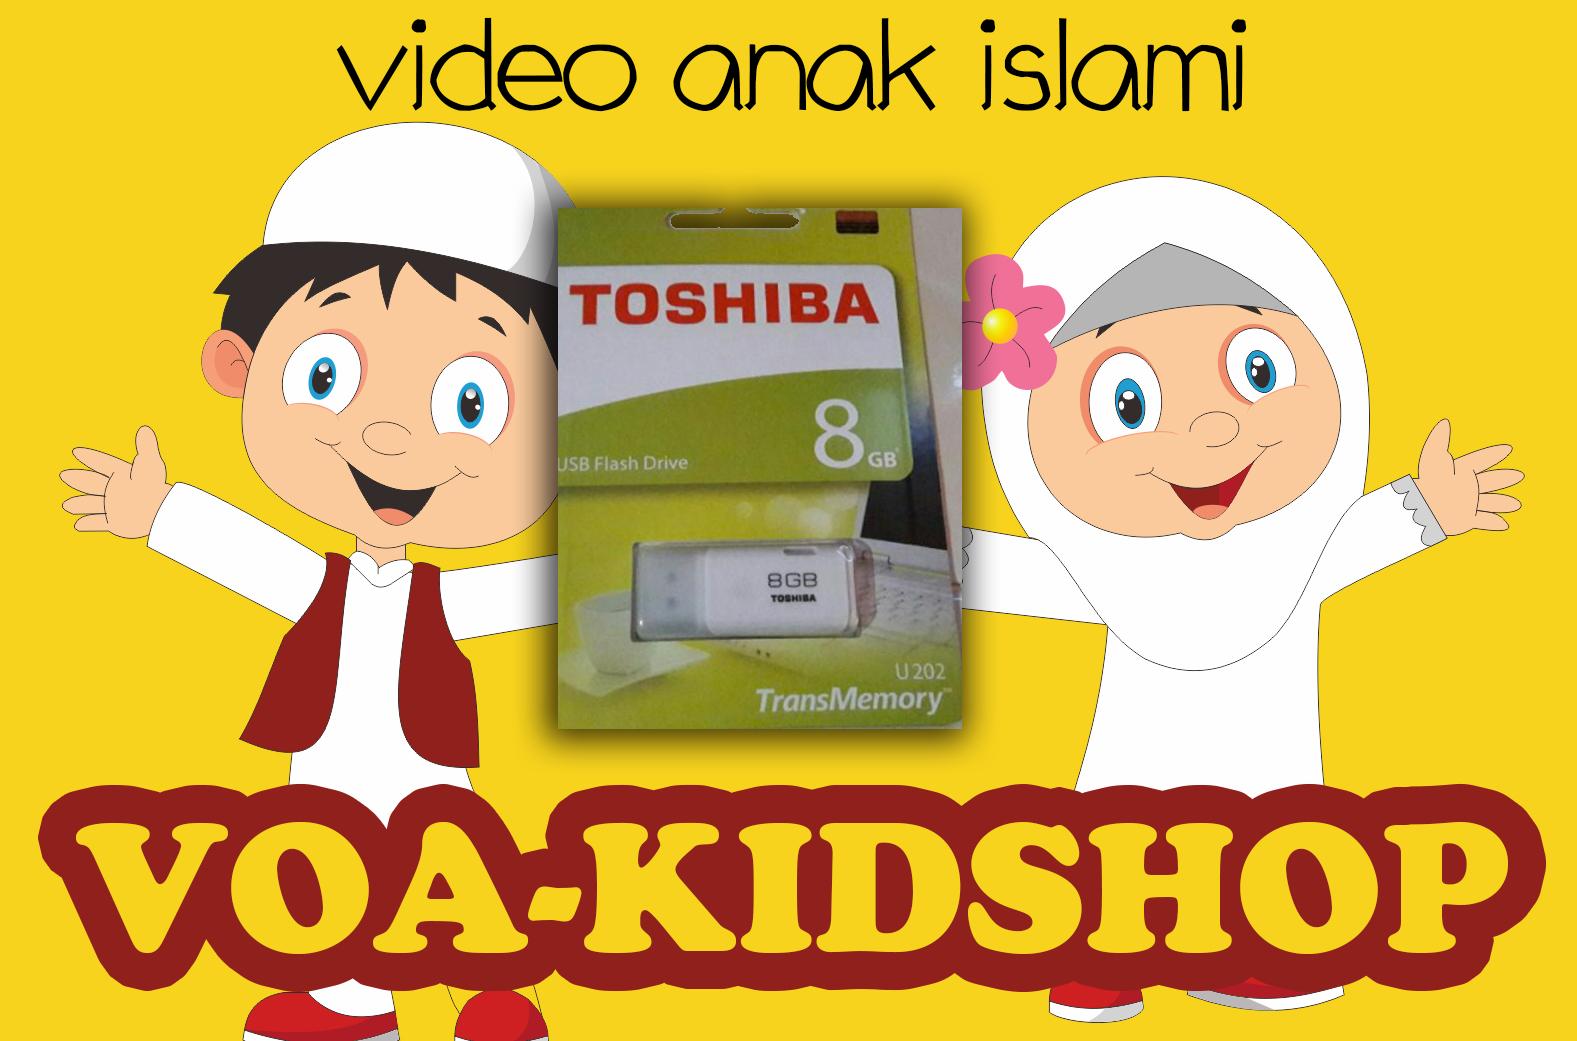 FLASHDISK VIDEO ANAK ISLAM! Solusi Video Mendidik Anak Islami